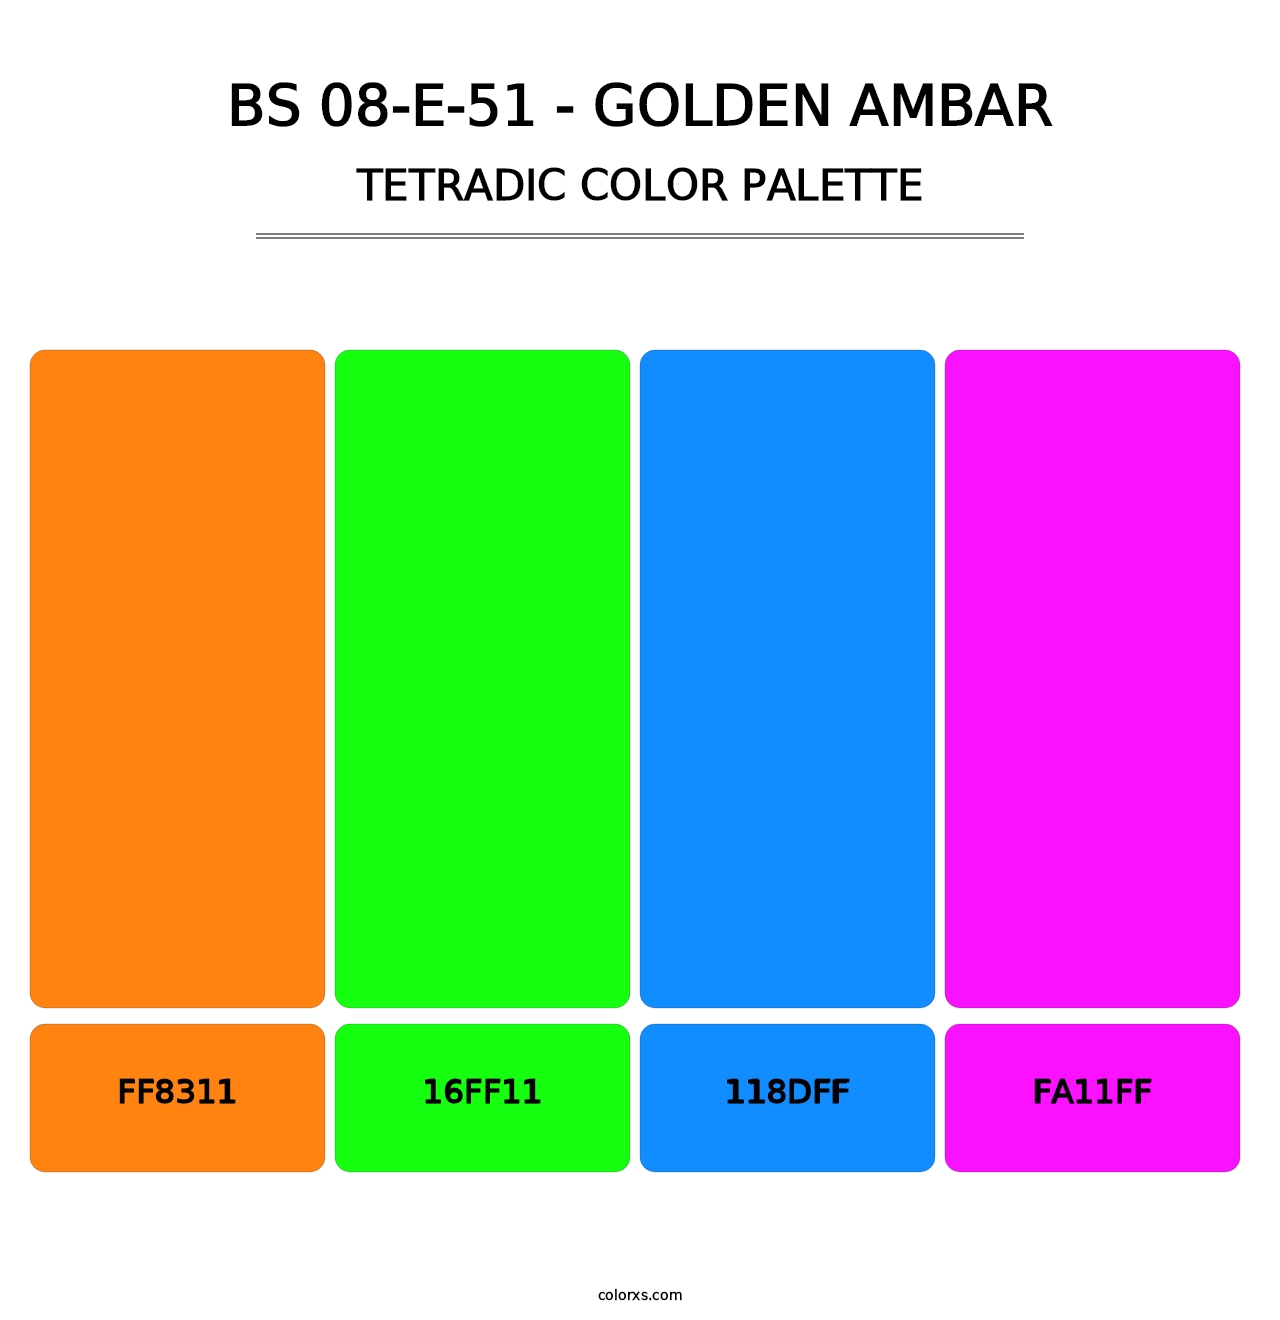 BS 08-E-51 - Golden Ambar - Tetradic Color Palette